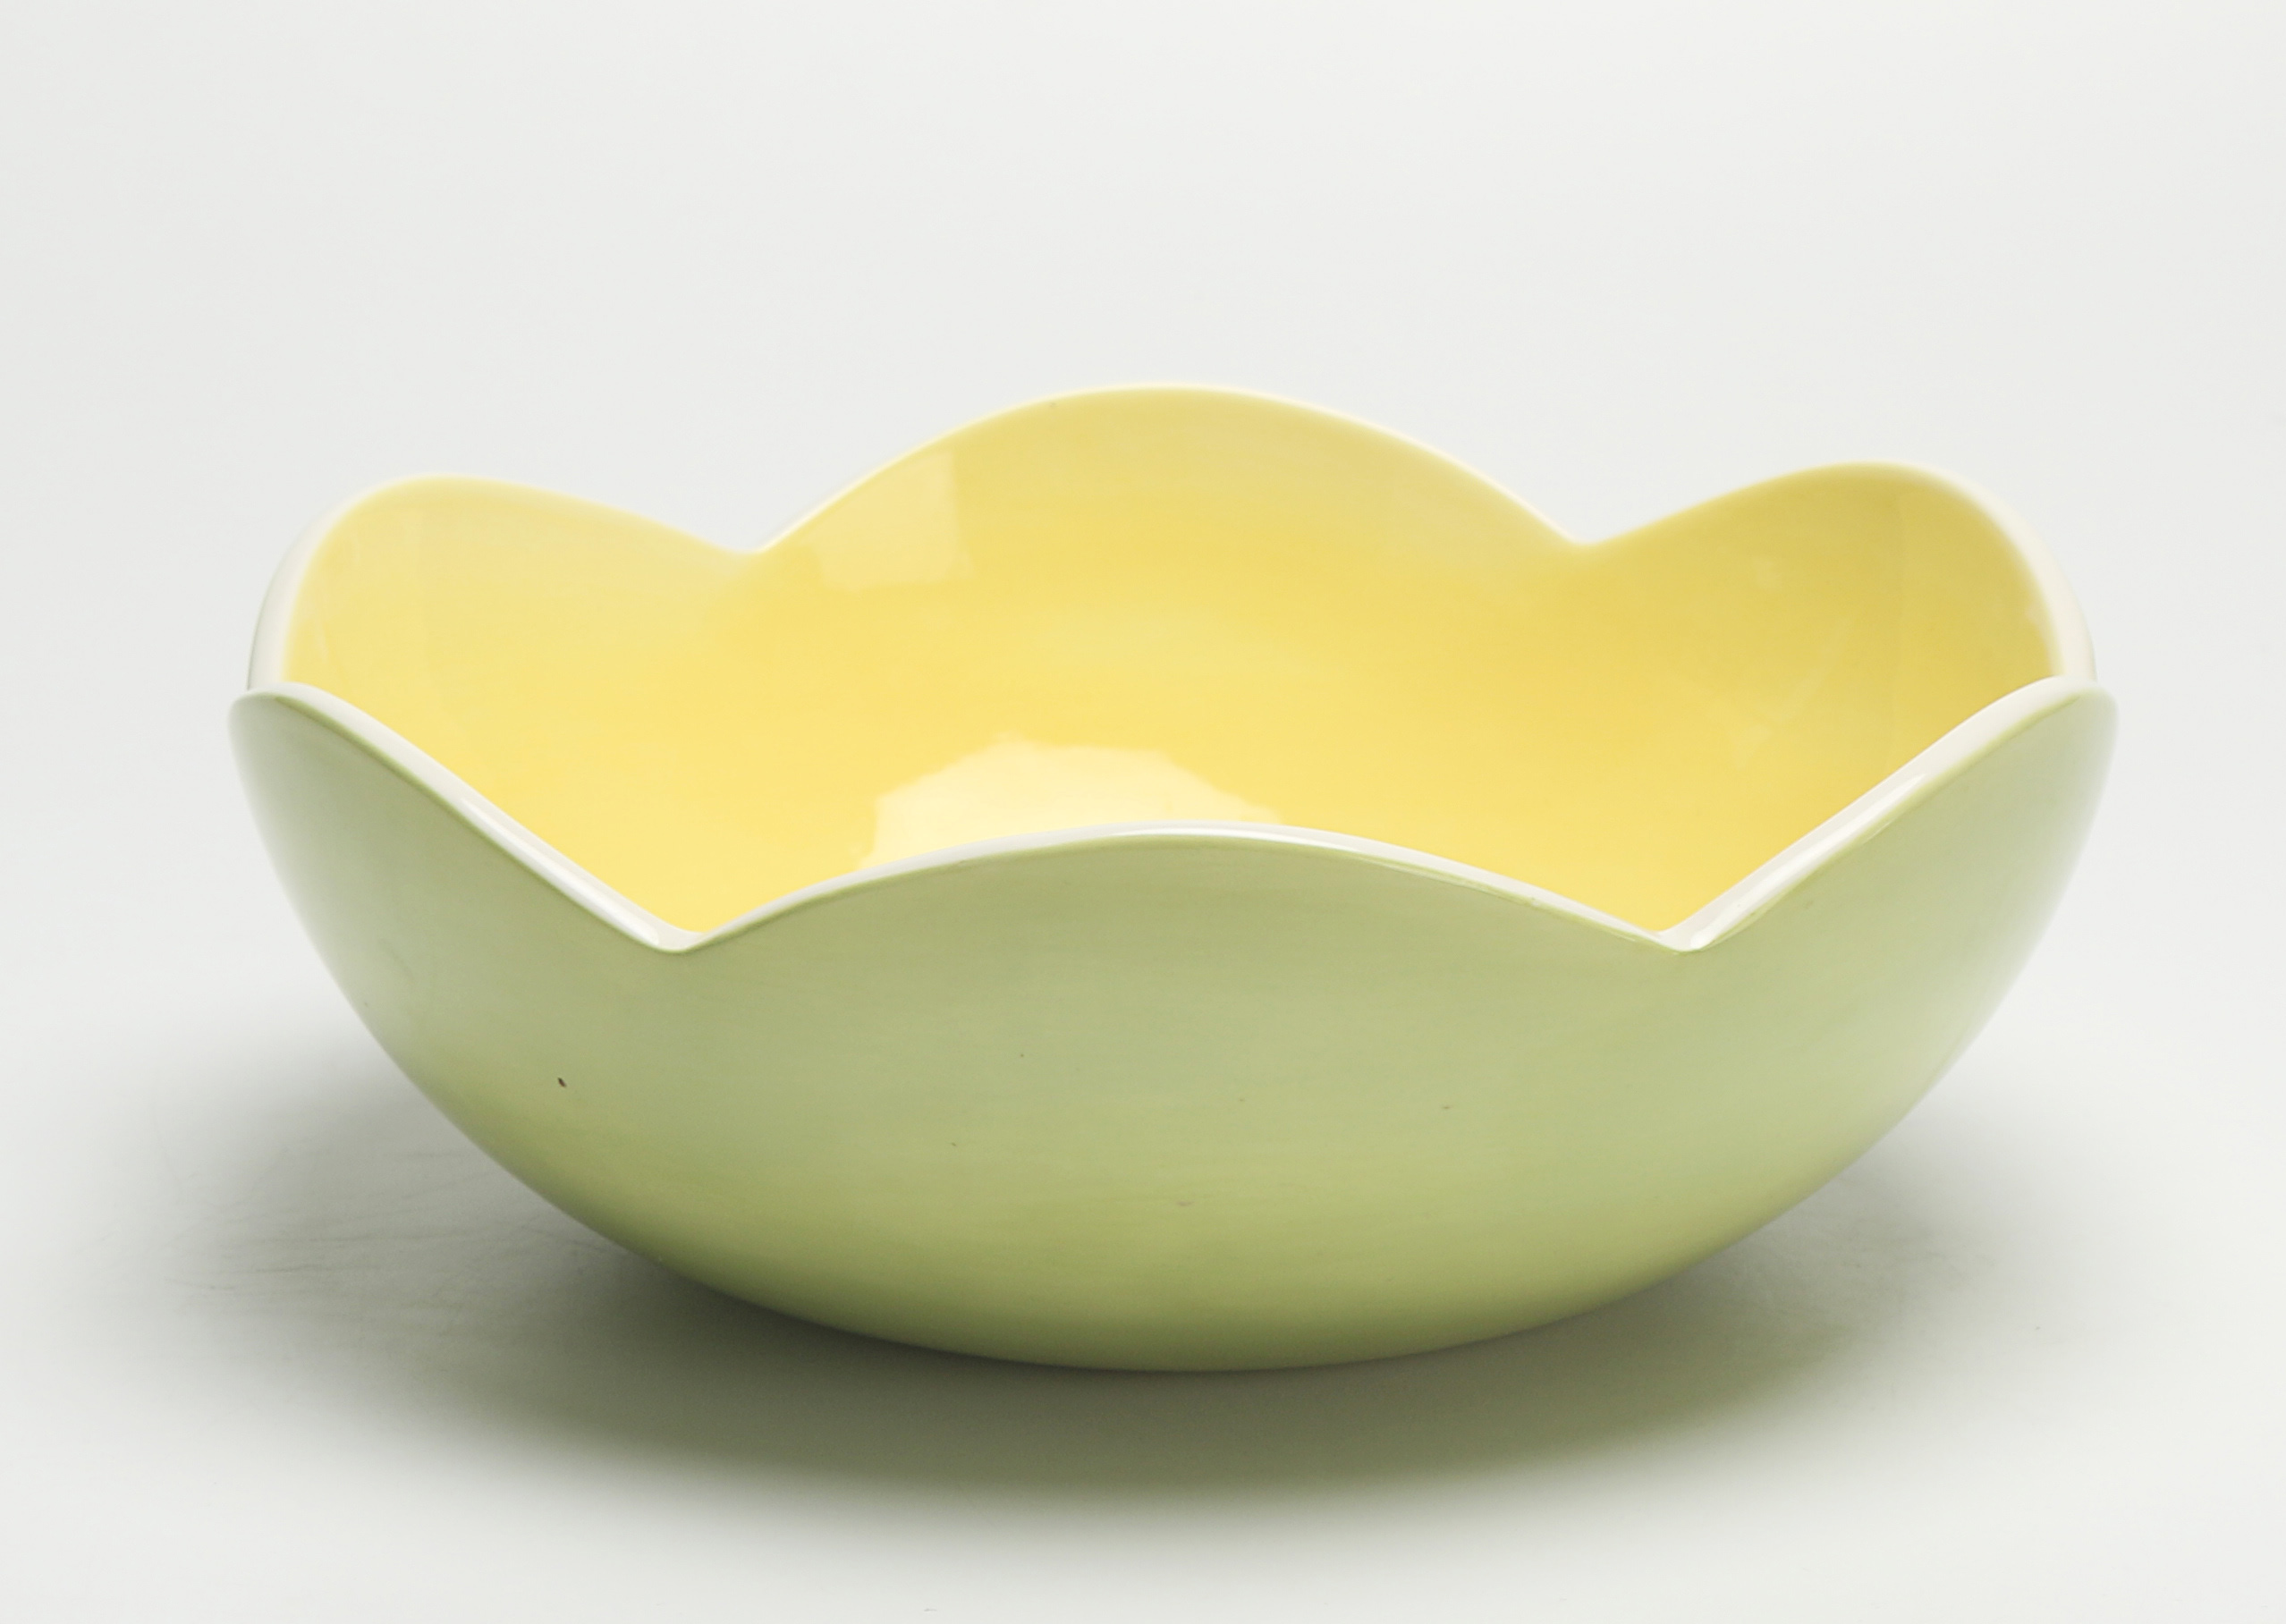 Mainstays Floral Shaped Ceramic Nested Bowl, Set of 3 - image 3 of 5